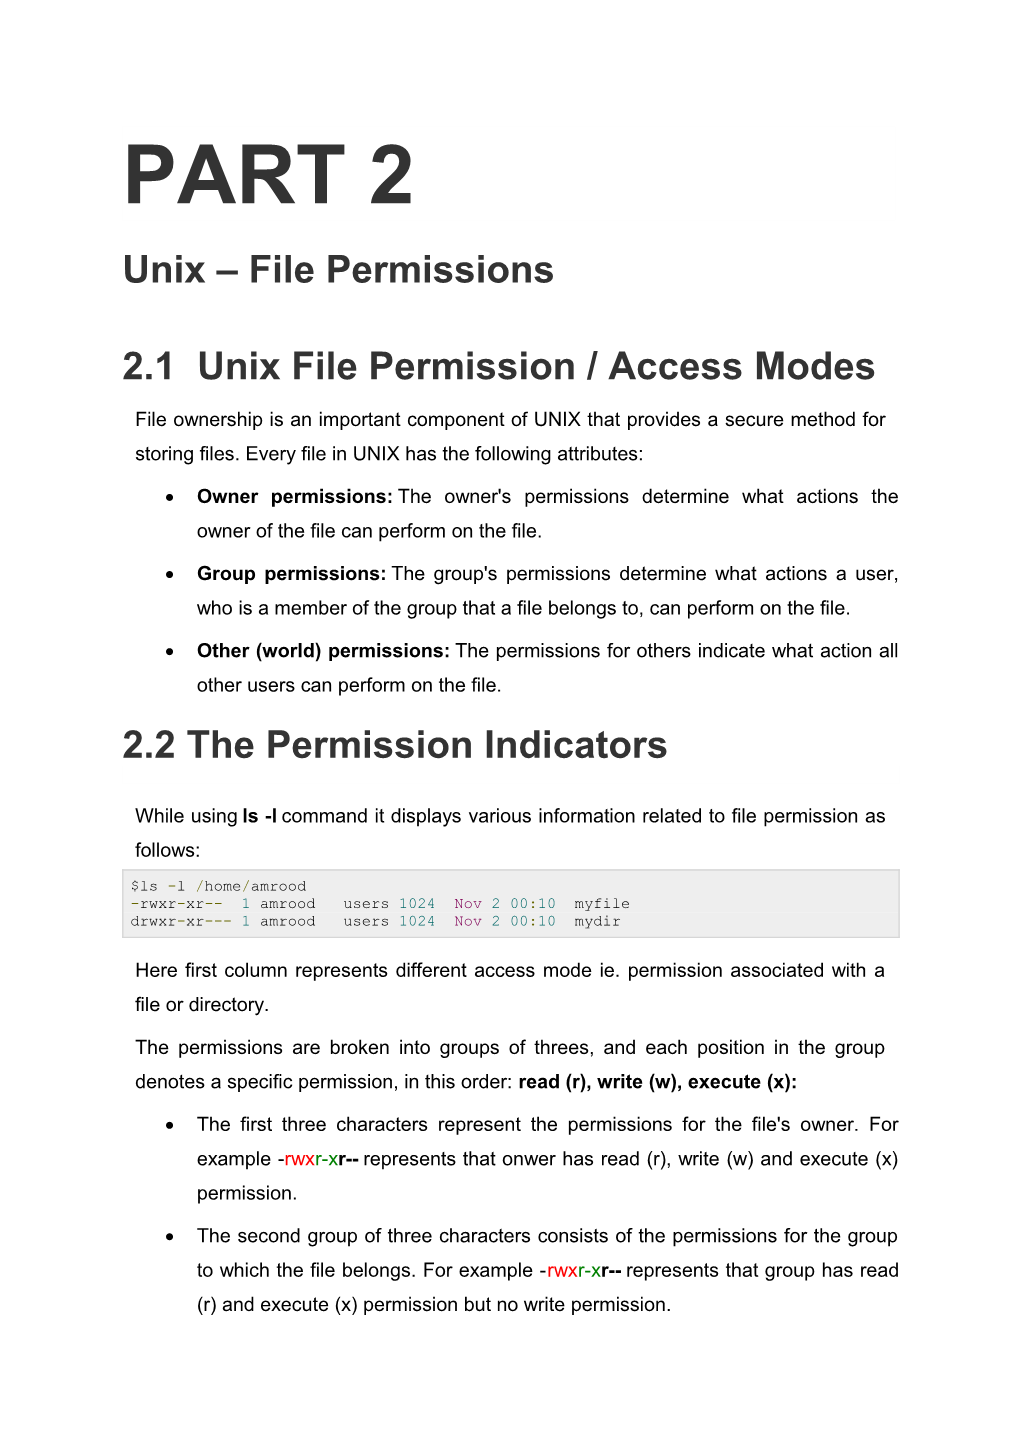 2.1 Unix File Permission / Access Modes